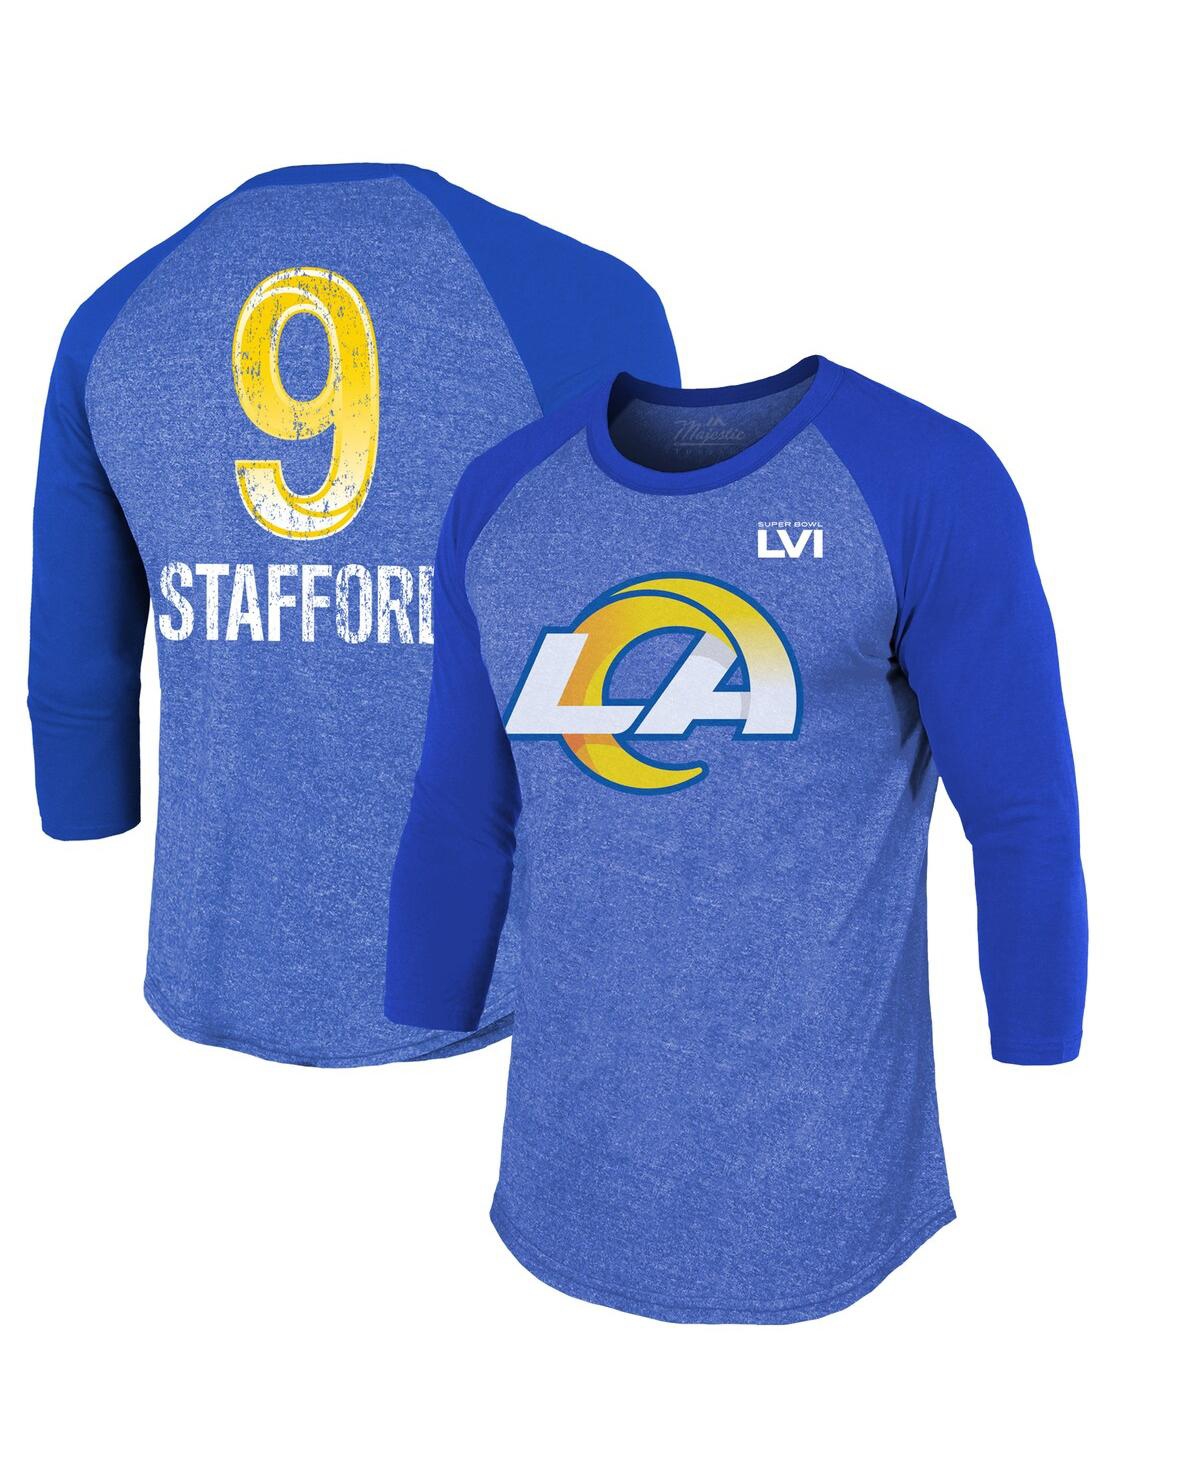 Men's Majestic Threads Matthew Stafford Royal Los Angeles Rams Super Bowl Lvi Name Number Raglan 3/4 Sleeve T-shirt - Royal